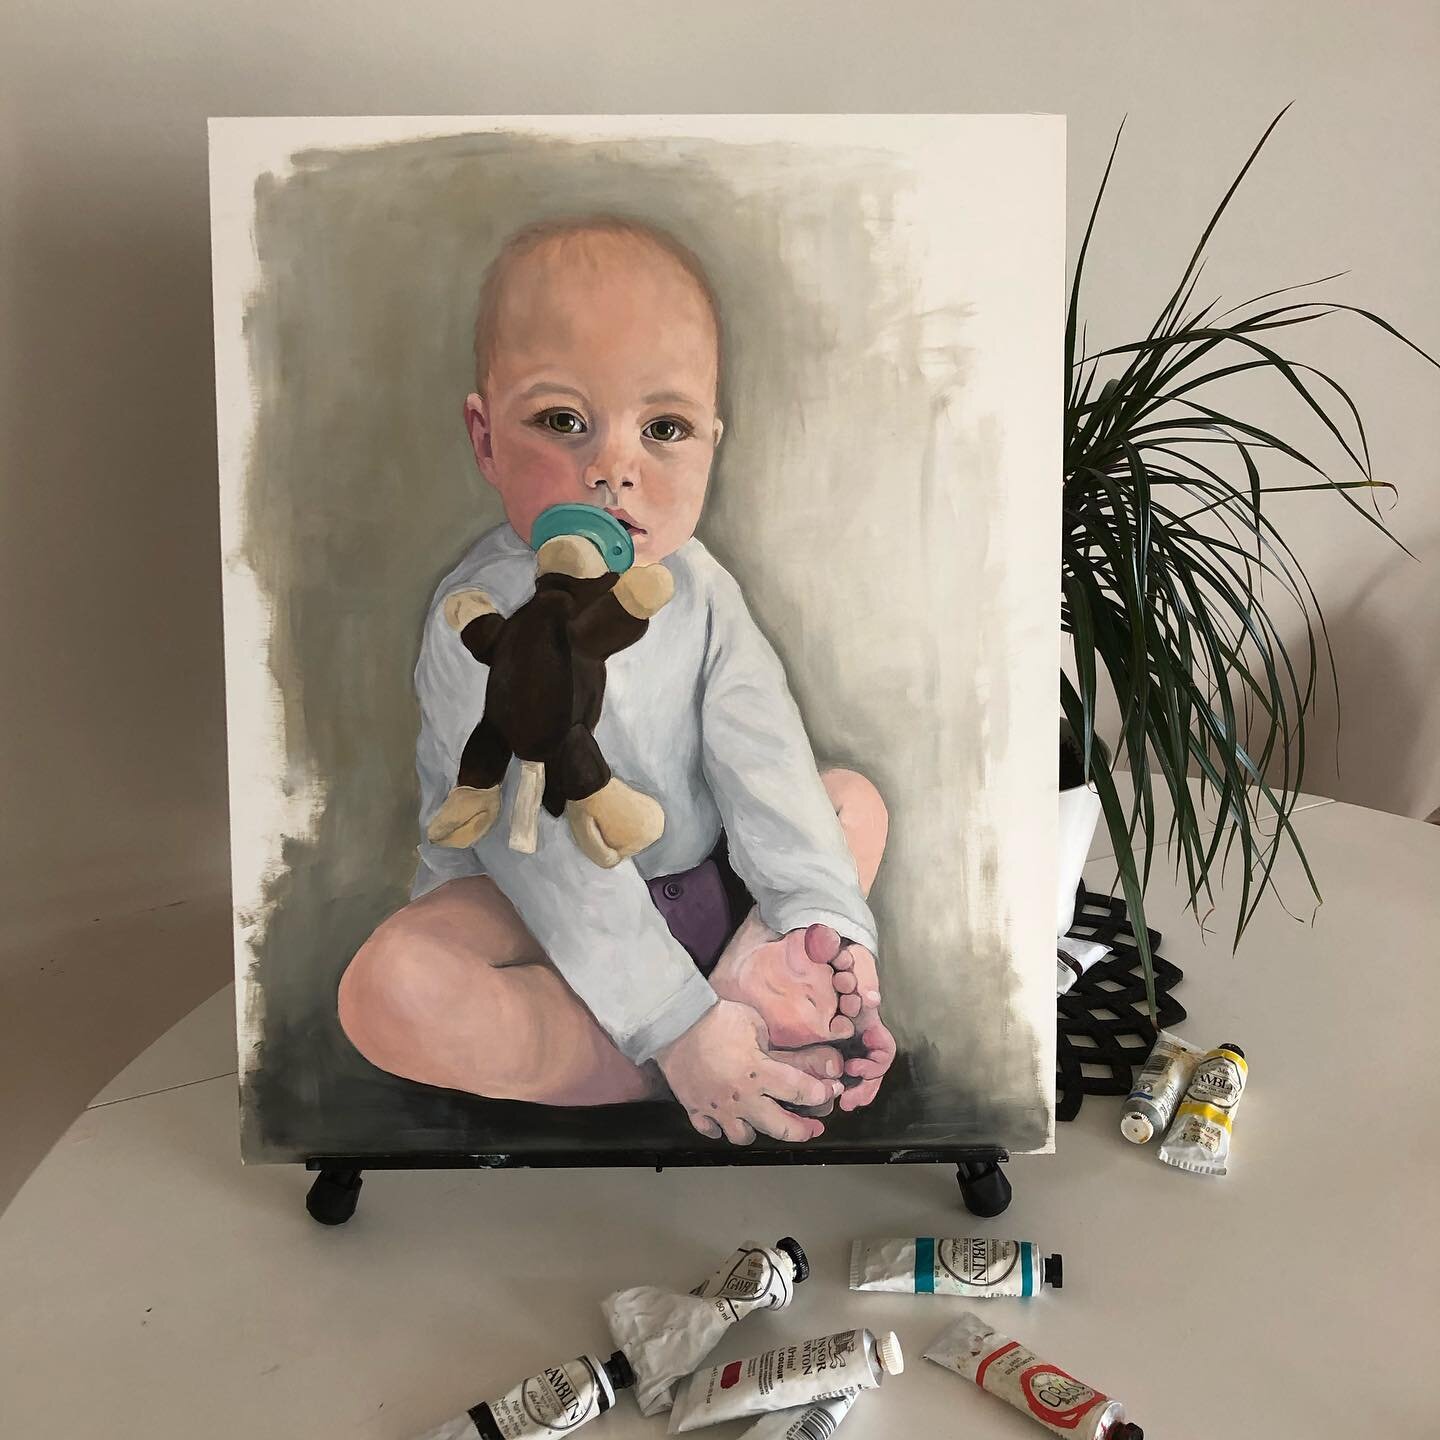 Baby Flo  #oilonpanel #babyportrait #oilpainting #yegart #art #painting #yeg #portrait #artistsoninstagram #artistsofinstagram #yeg #yegart #yegartist #portraitpainting #oilportrait